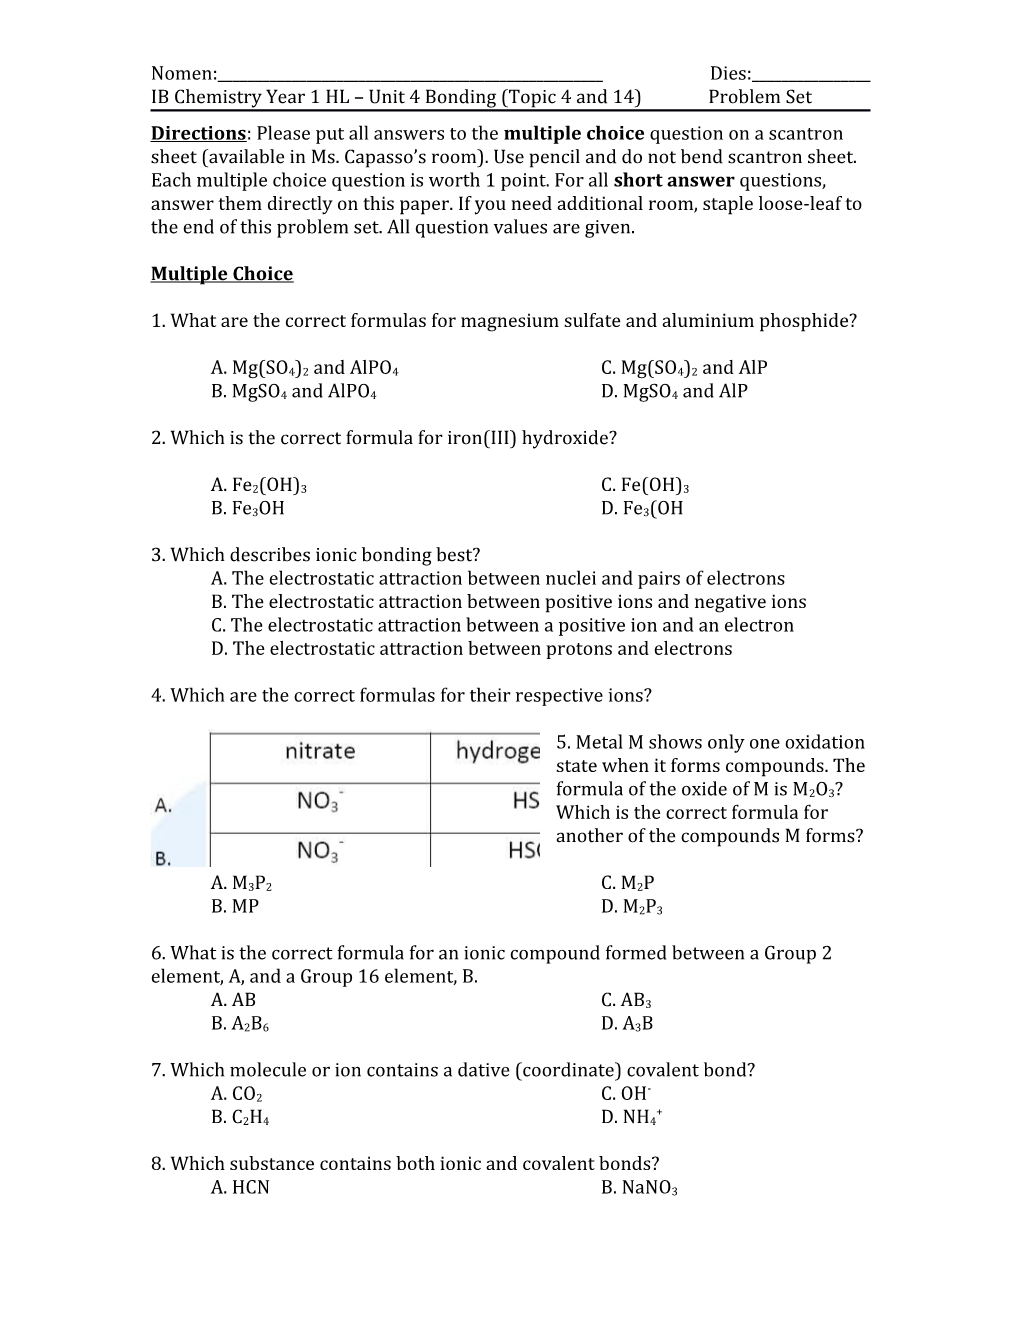 IB Chemistry Year 1 HL Unit 4 Bonding (Topic 4 and 14) Problem Set